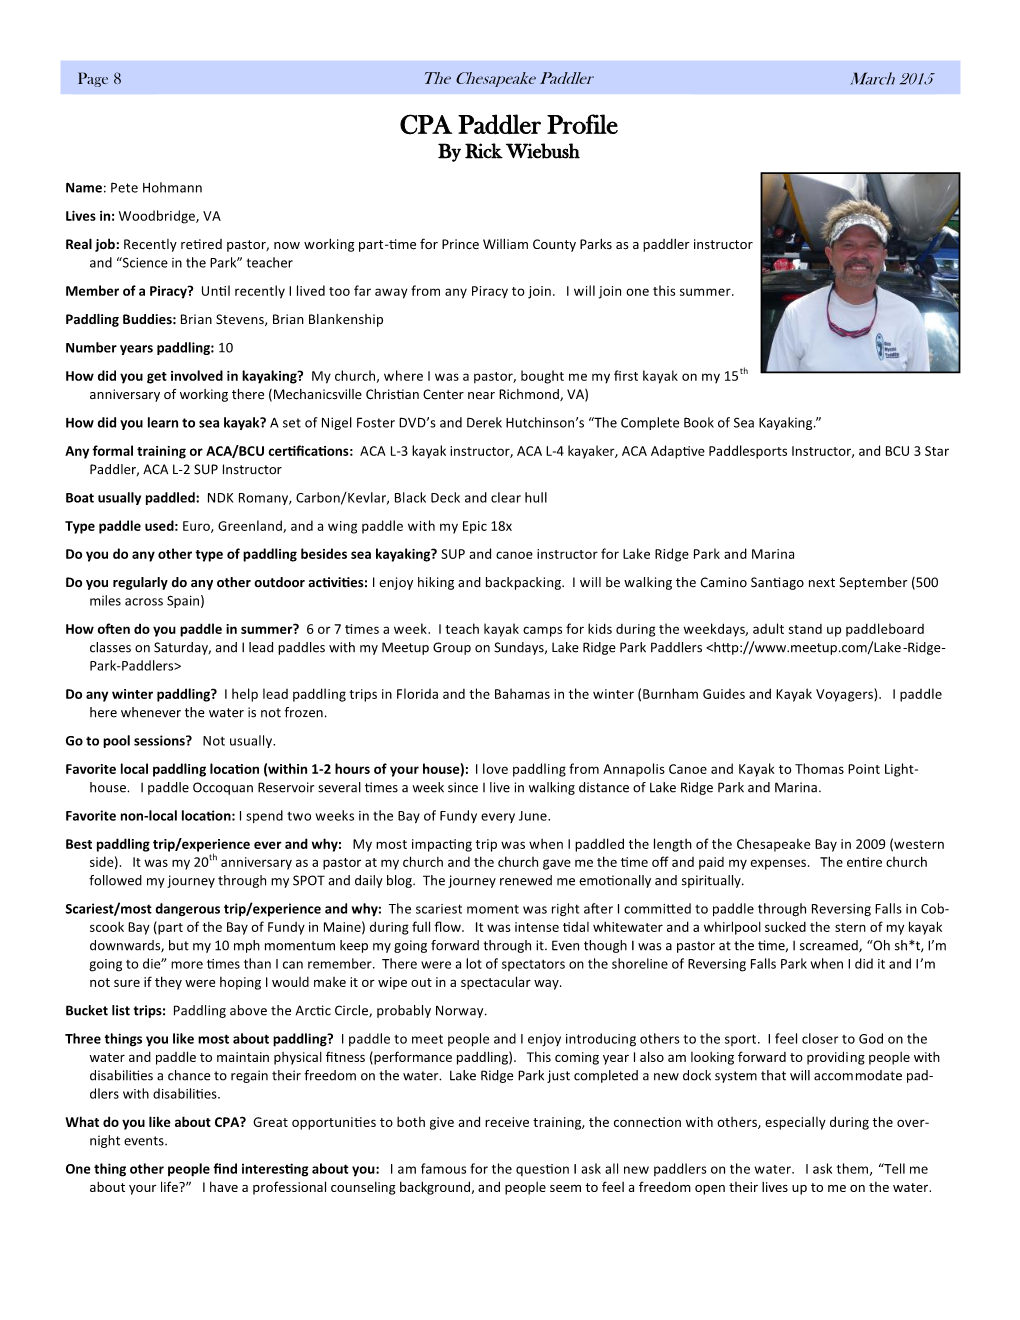 CPA Paddler Profile by Rick Wiebush